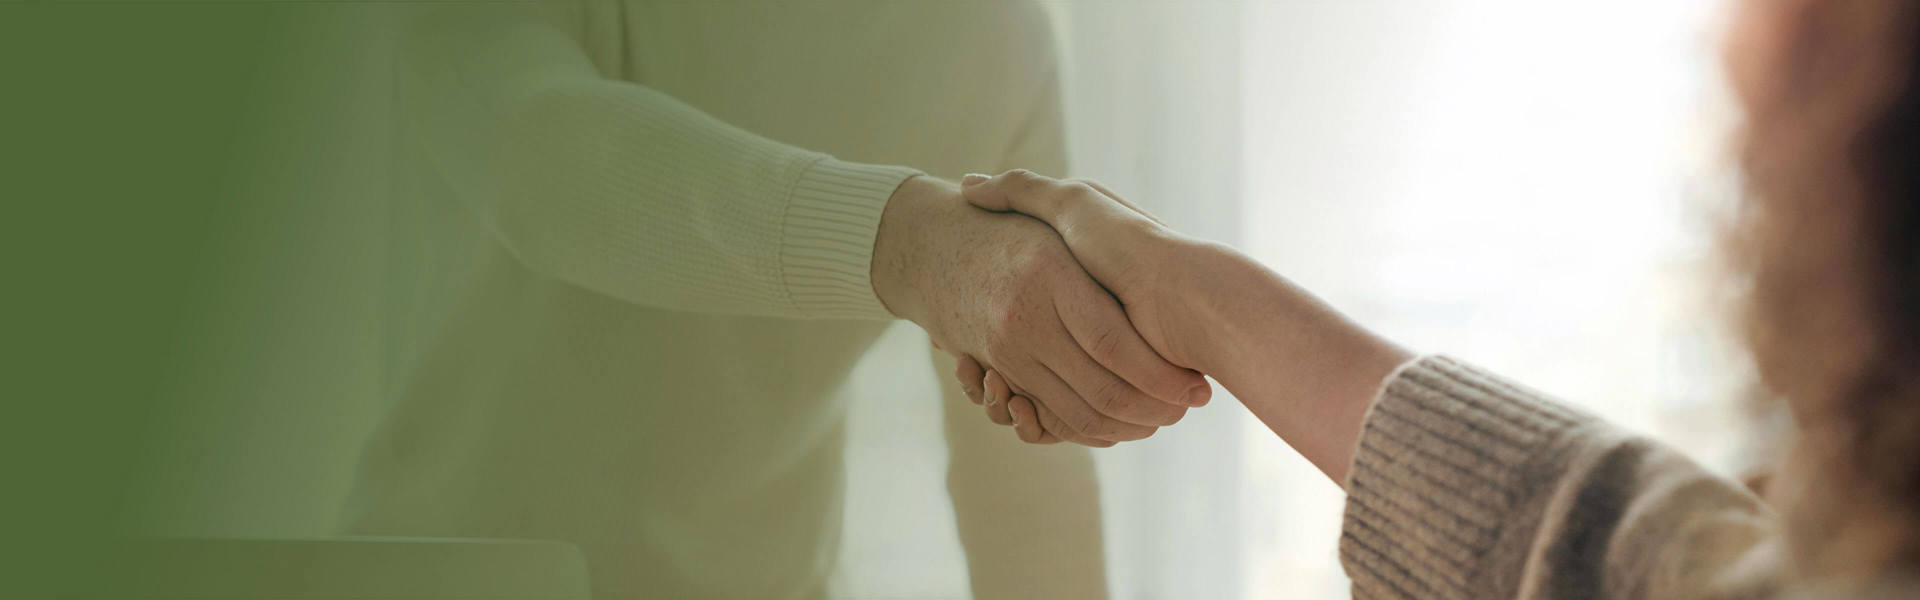 cinclus pharma header shaking hands